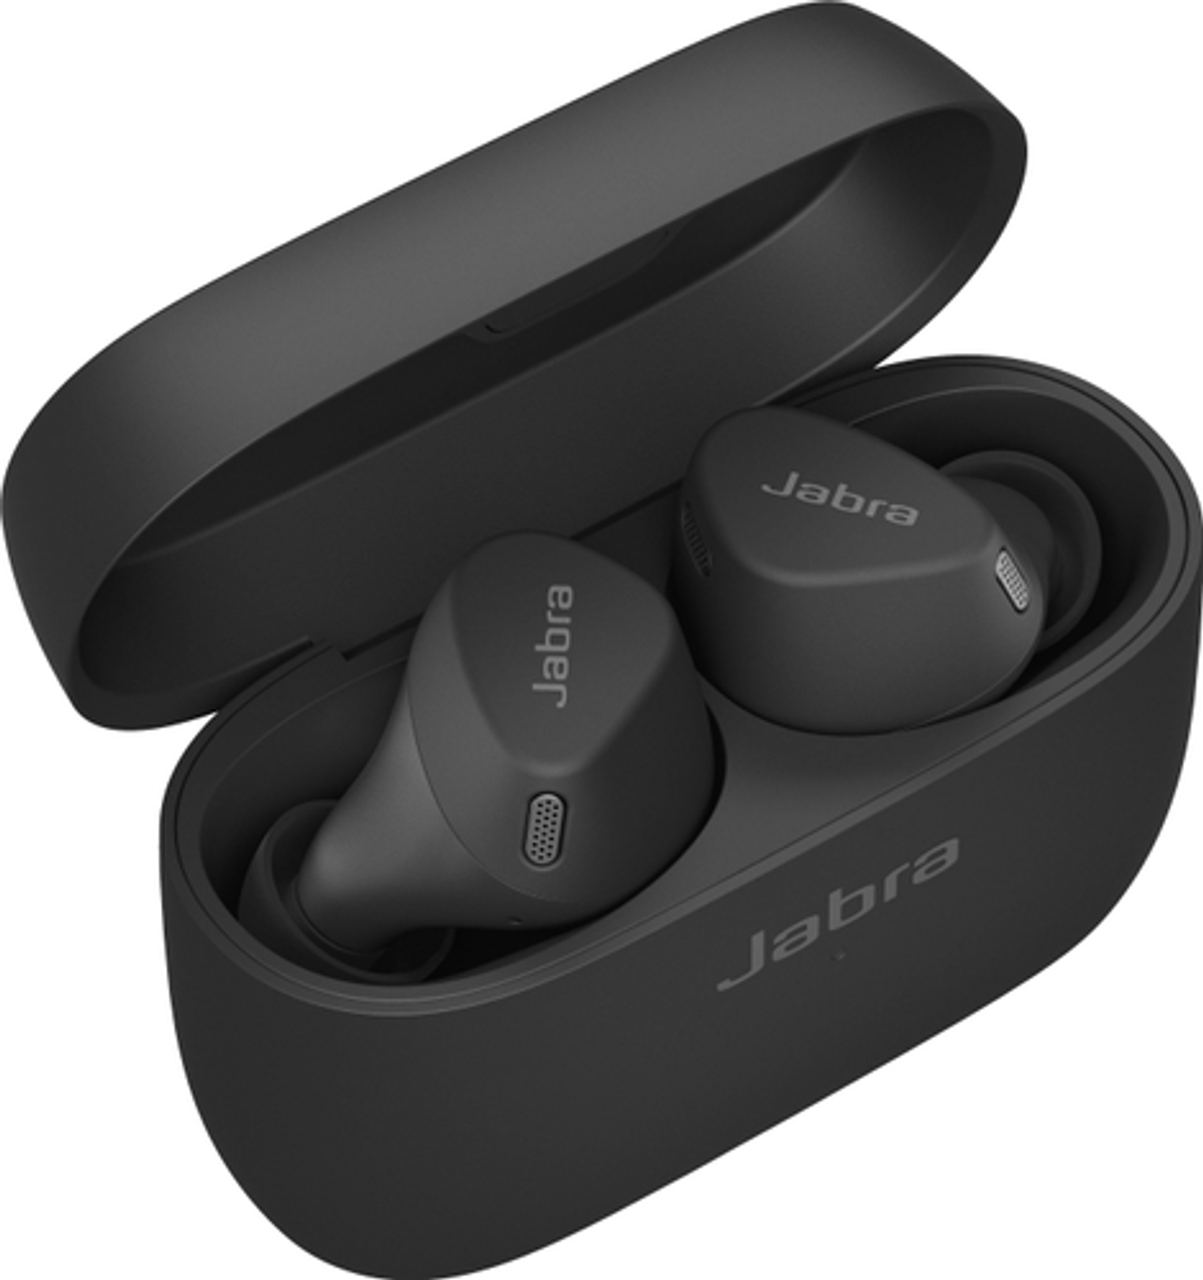 Jabra - Elite 4 Active True Wireless Noise Canceling In-Ear Headphones - Black - Black